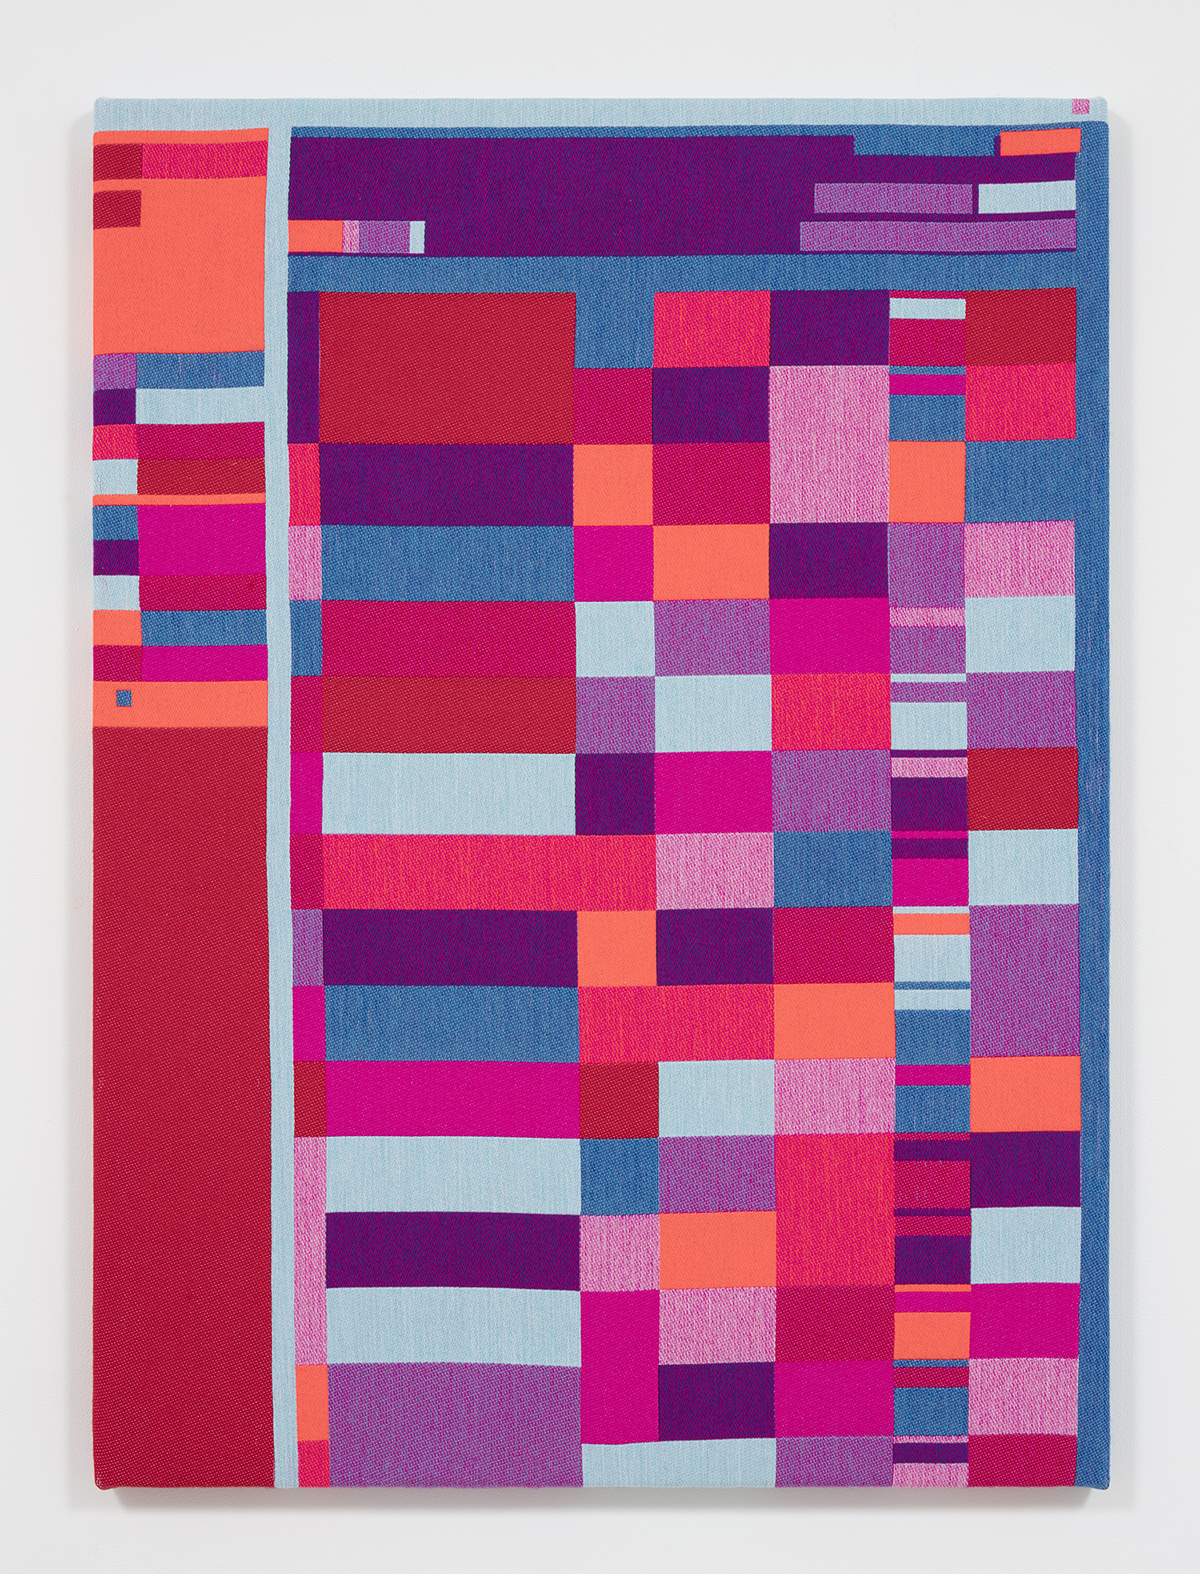 Rafael Rozendaal. <em>Abstract Browsing 17 05 02 (Wordpress)</em>, 2017. Jacquard weaving, 56 3/4 x 41 1/2 inches  (144.1 x 105.4 cm)